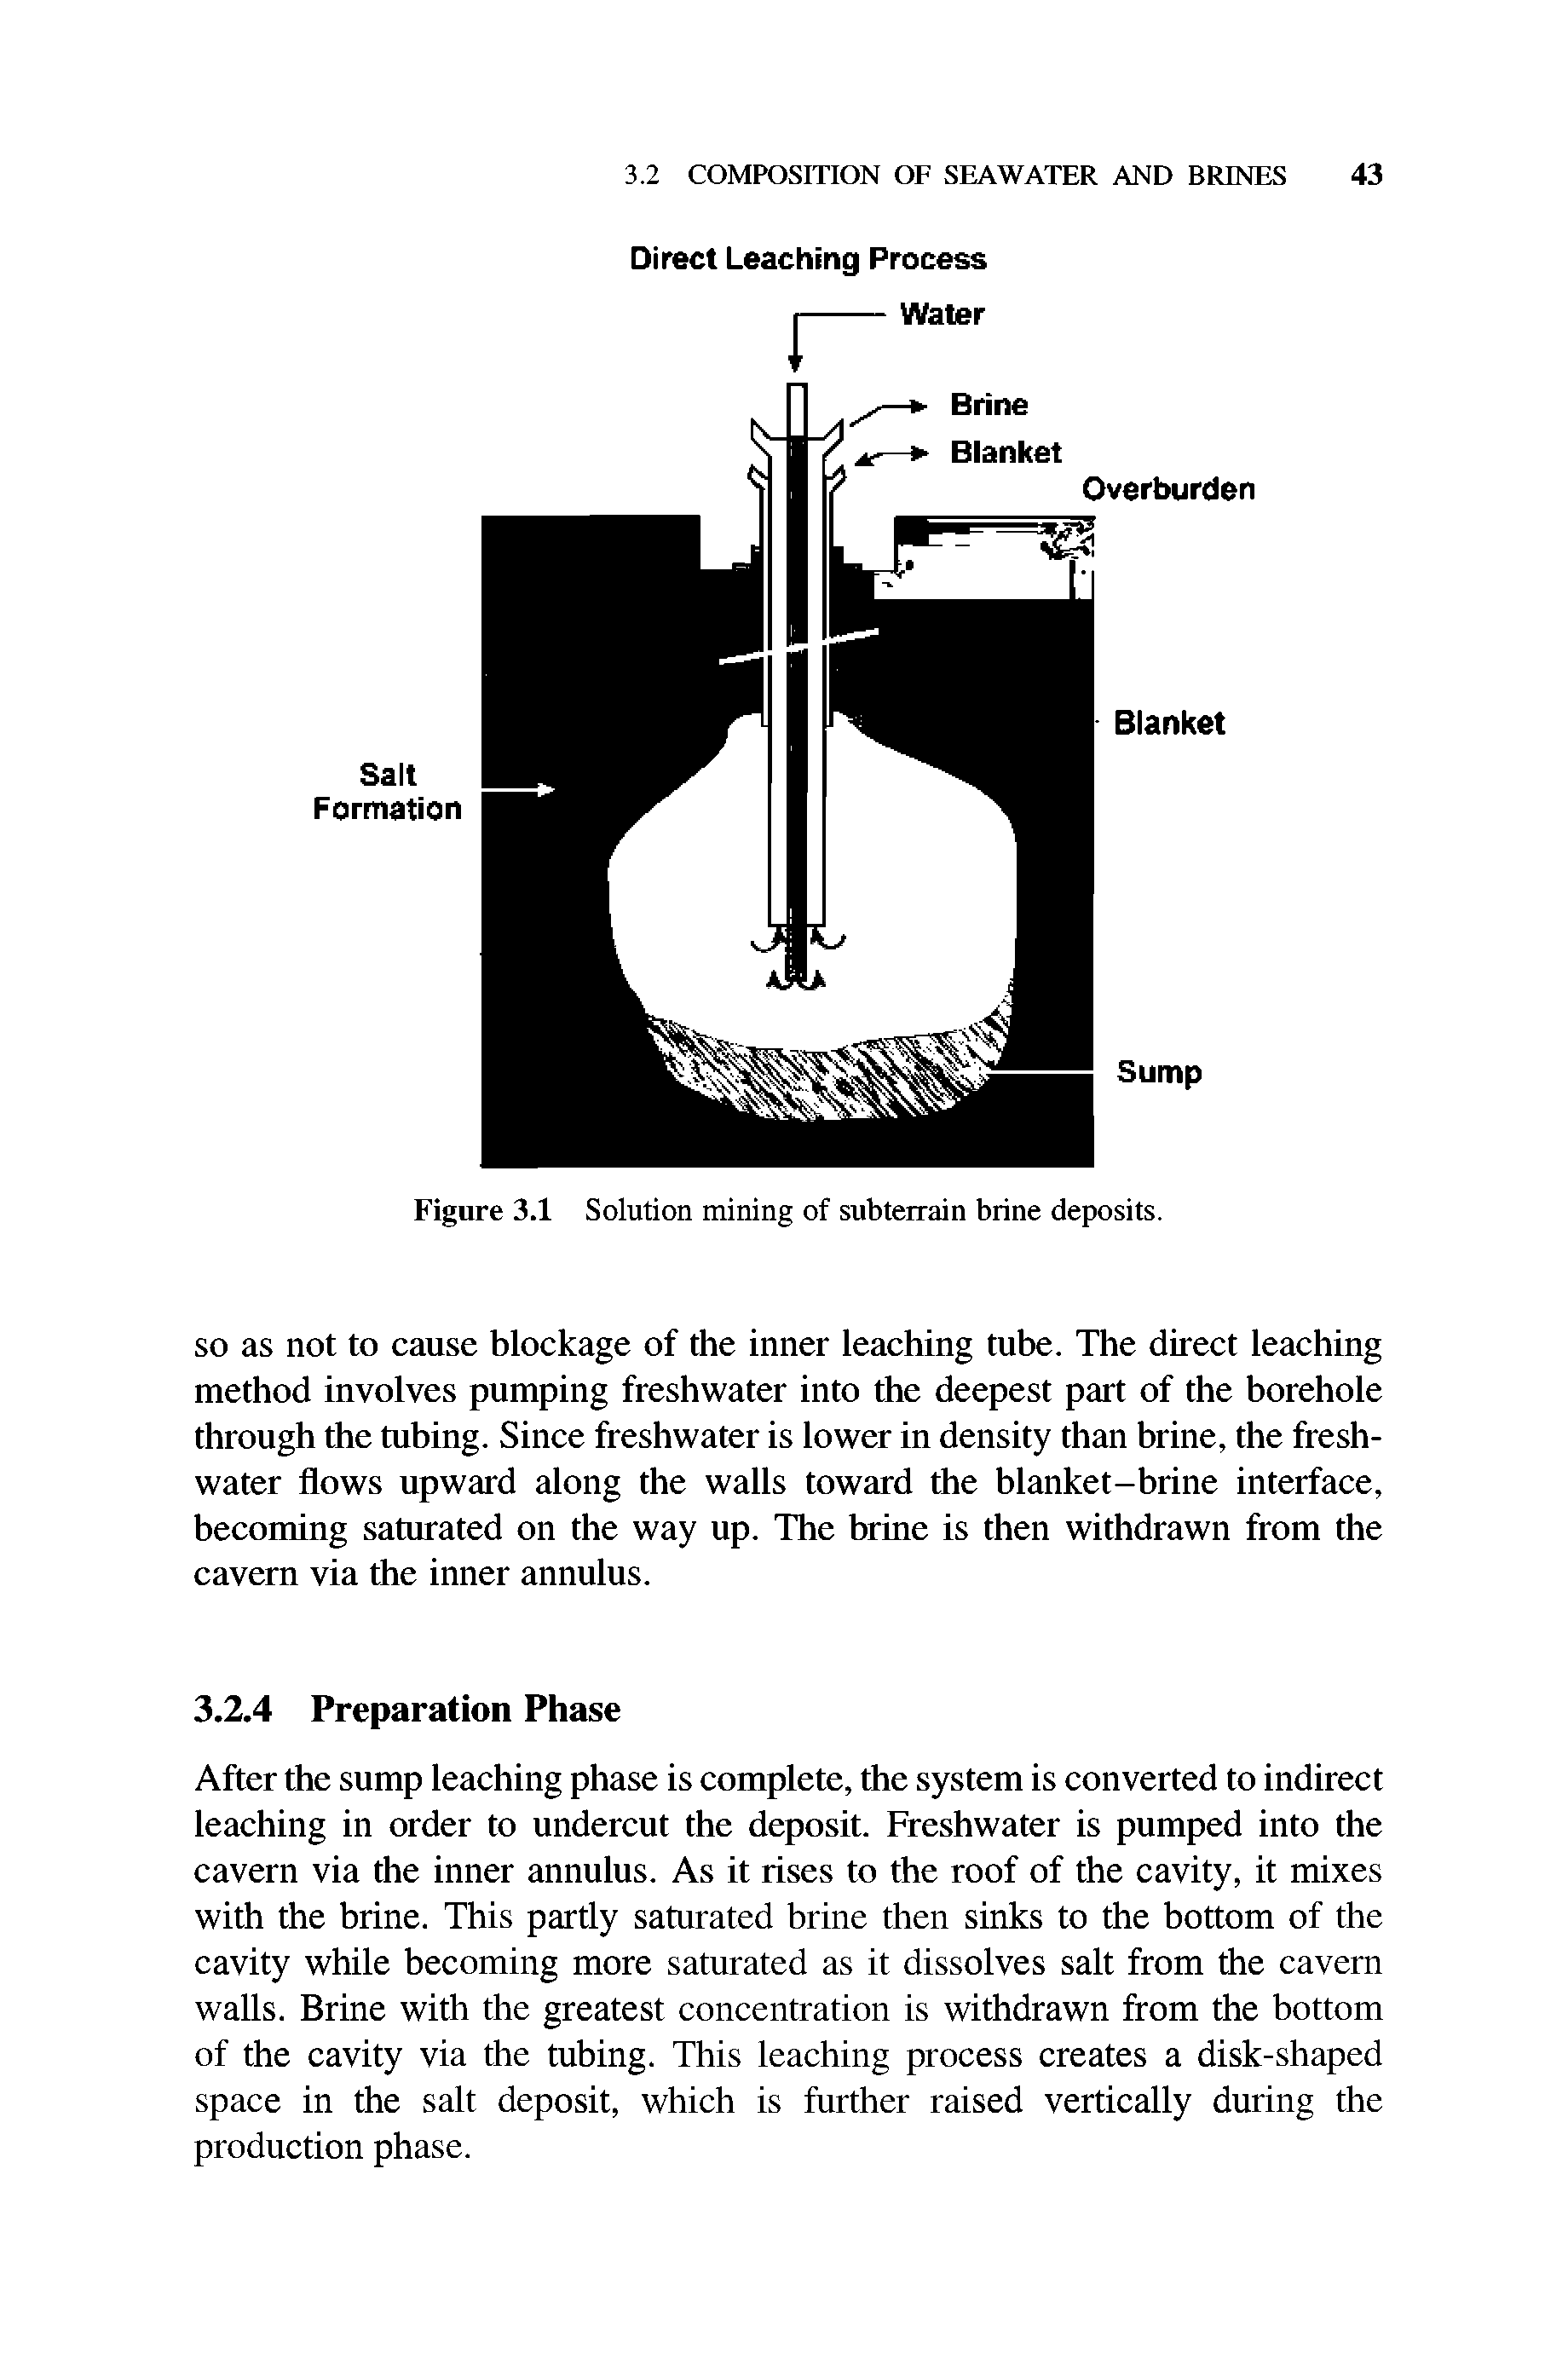 Figure 3.1 Solution mining of subterrain brine deposits.